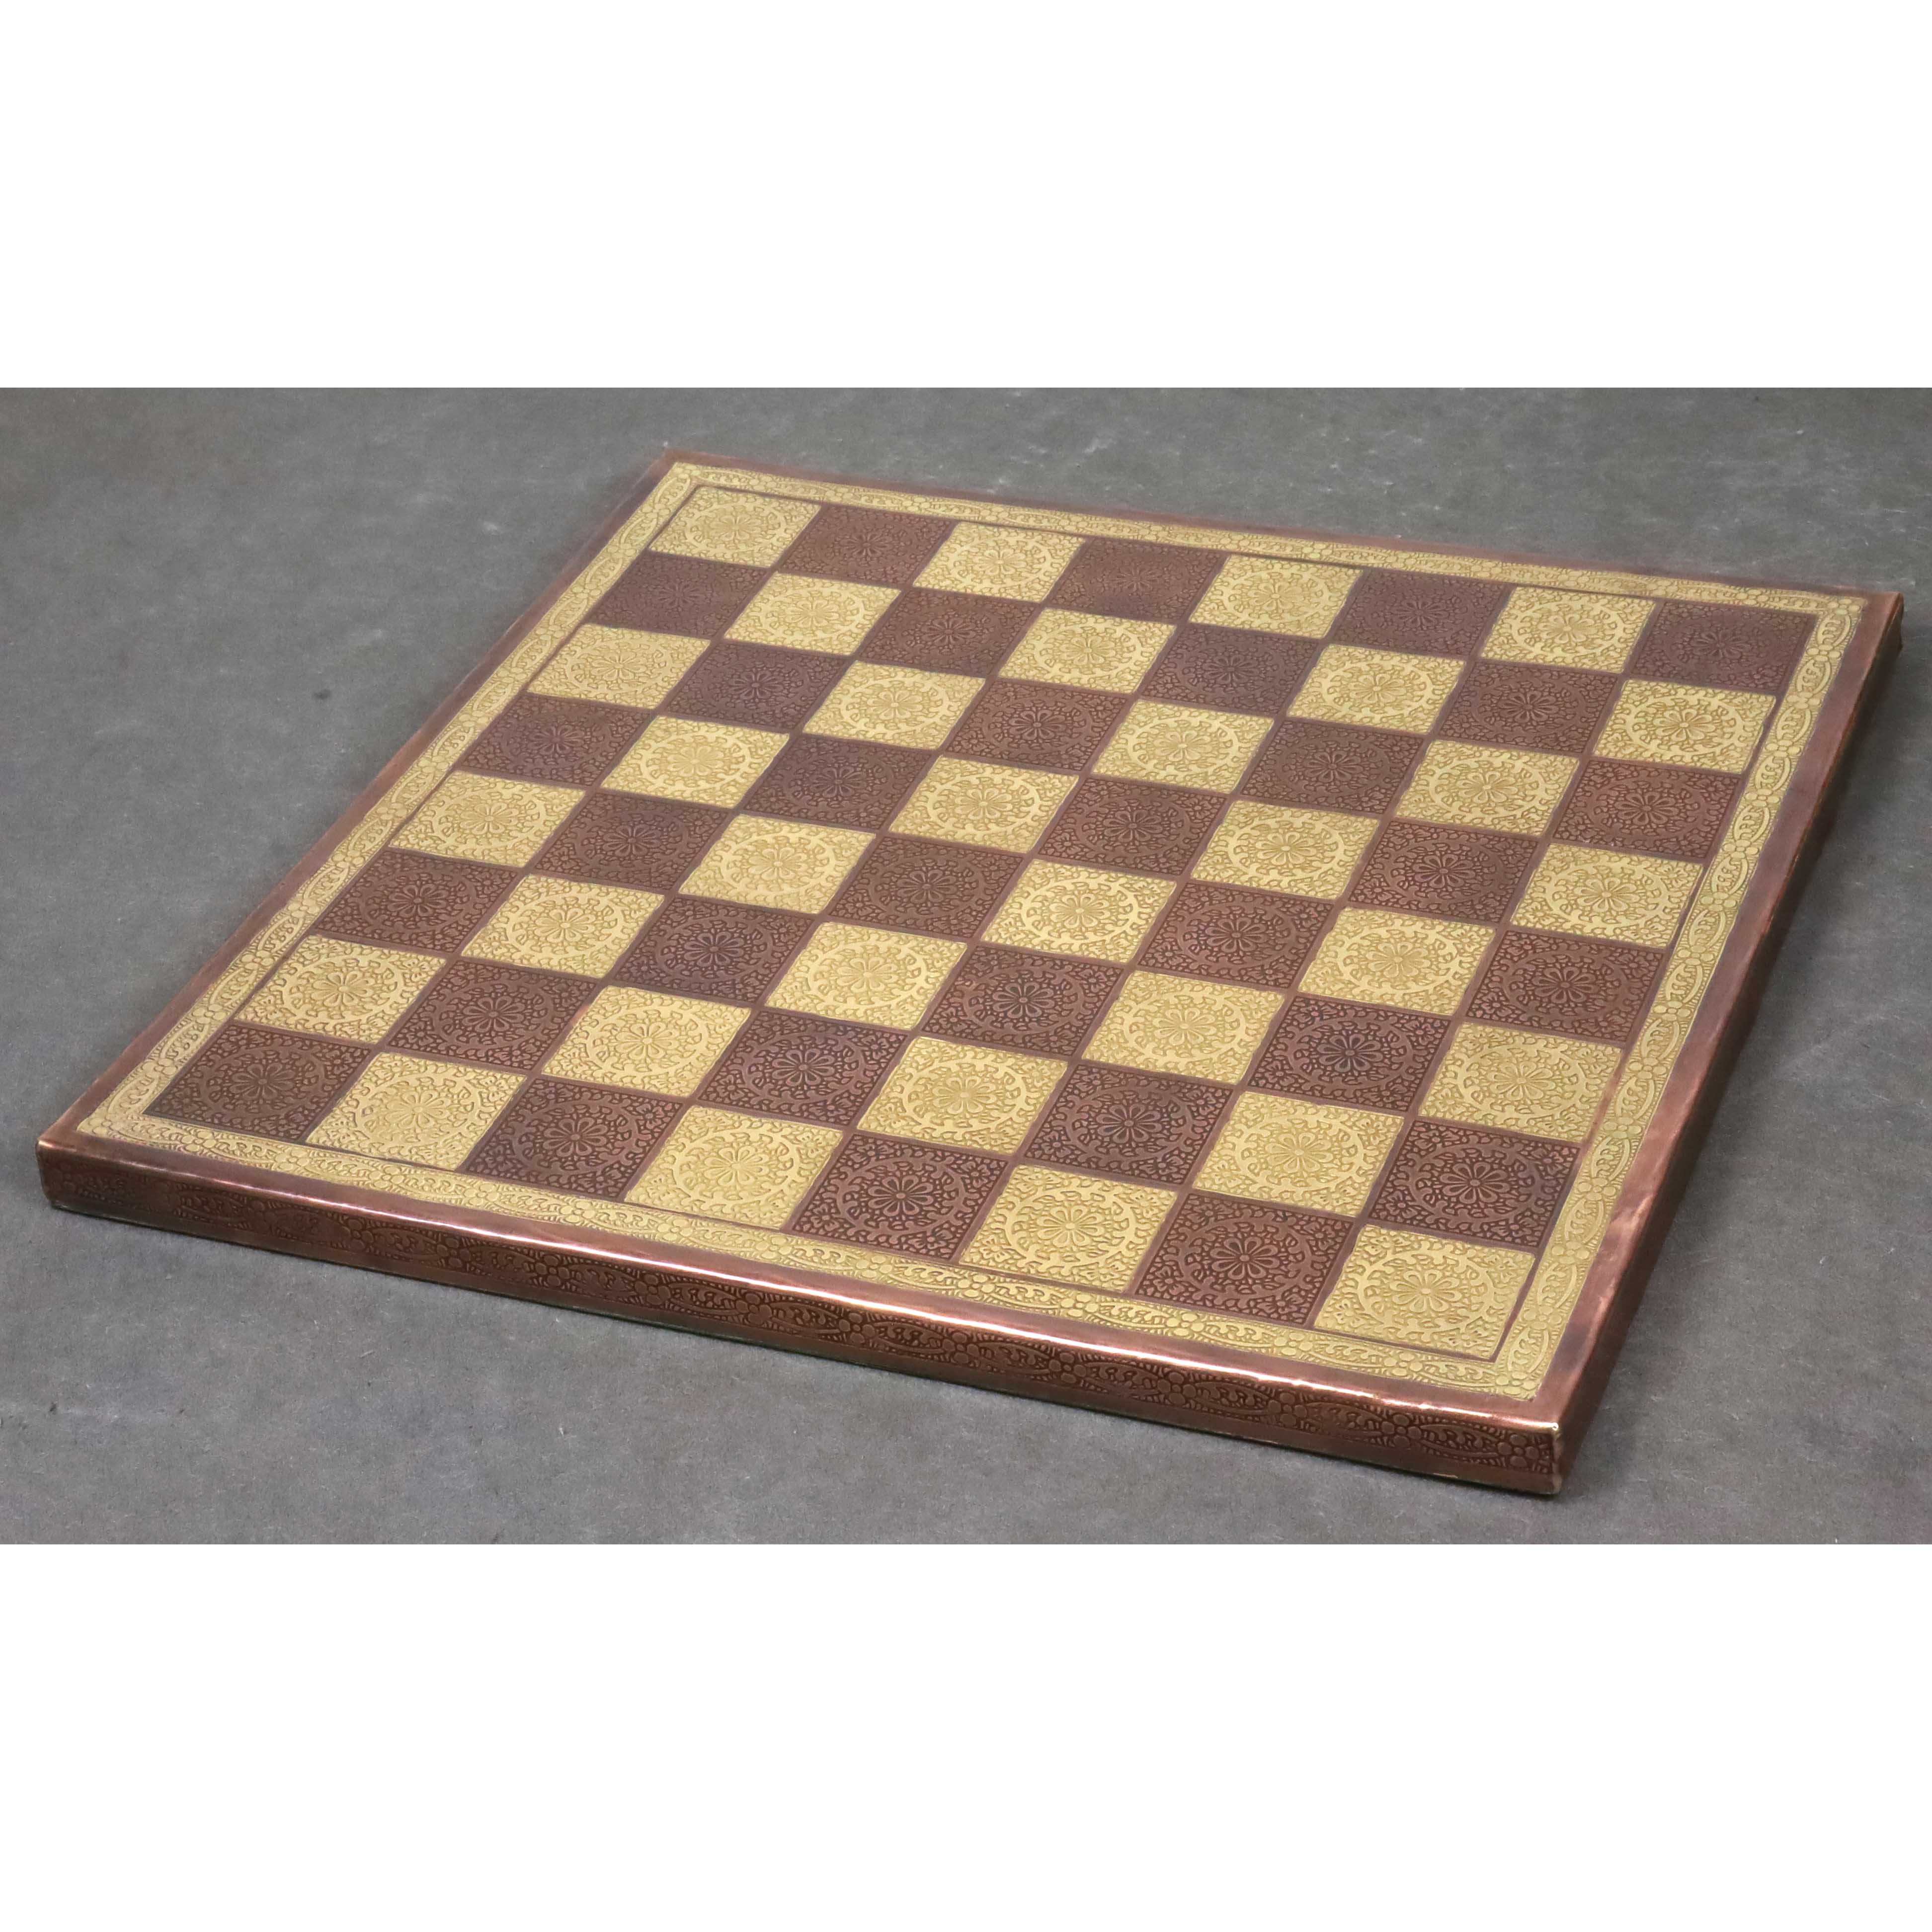 Contemporary Modern Chess Set - ChessBaron Chess Sets USA - Call